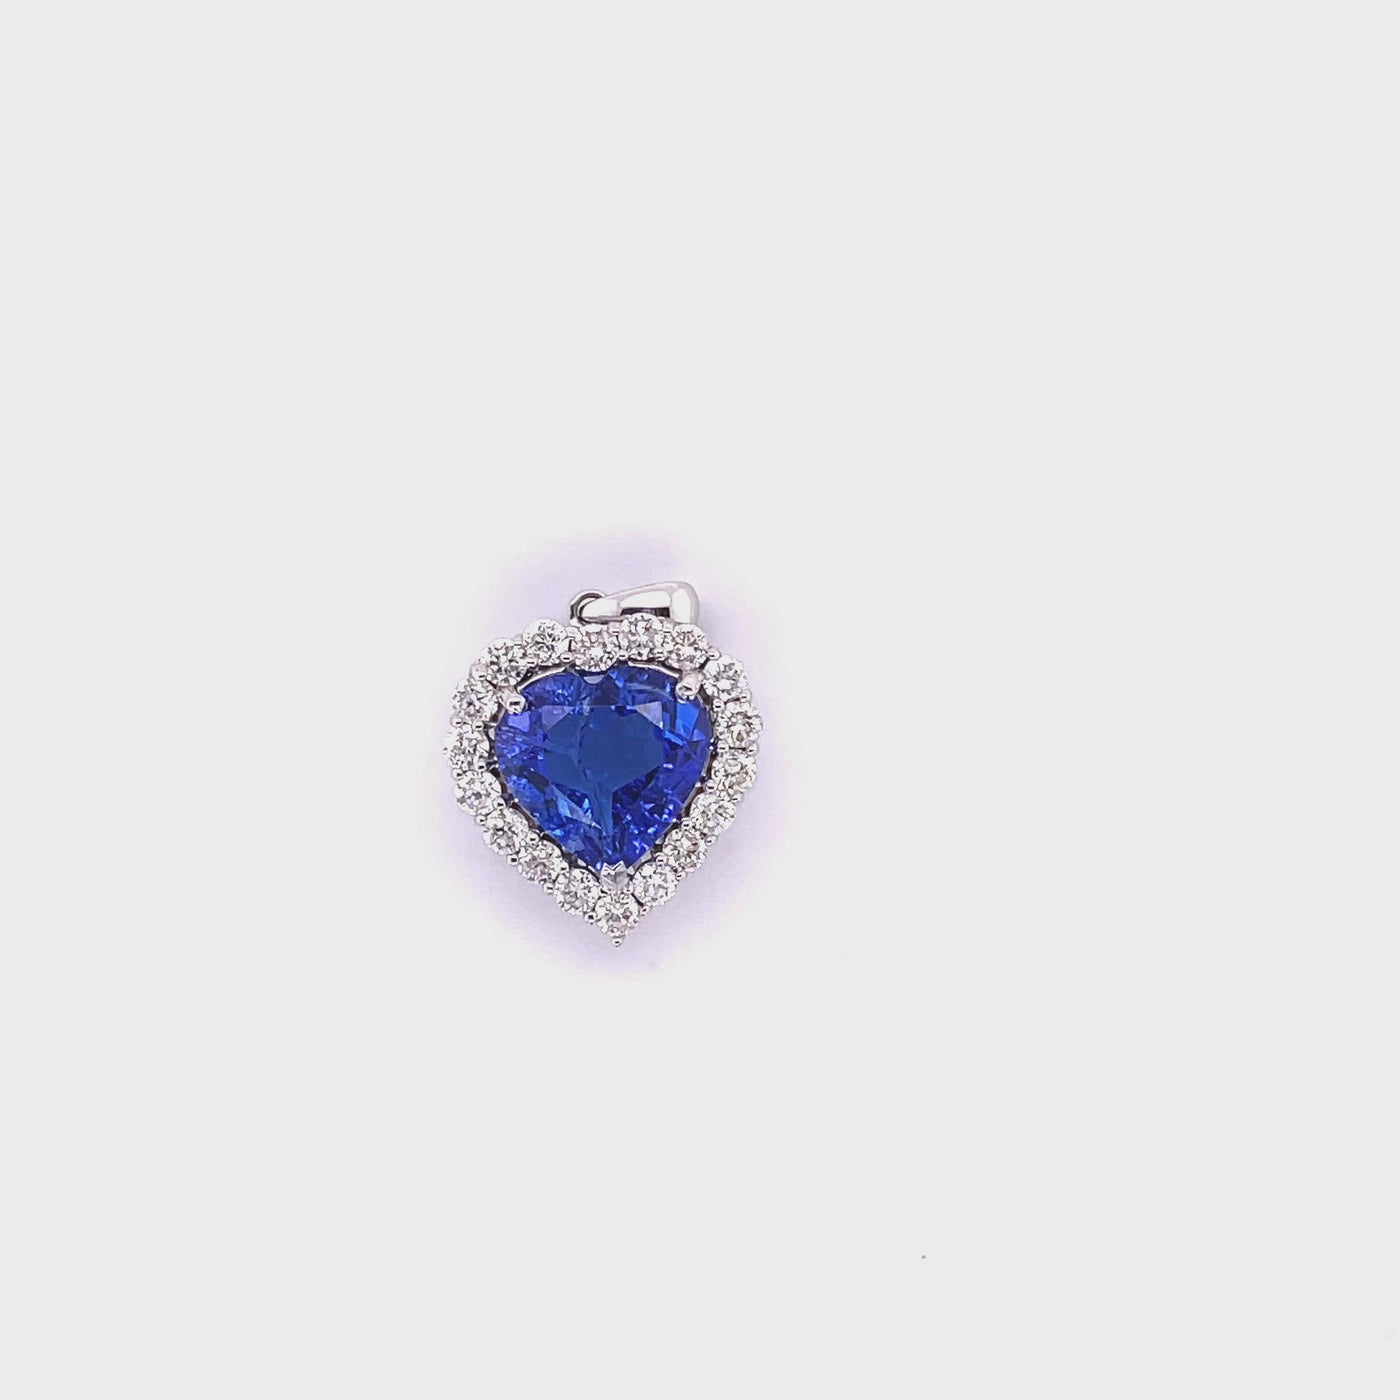 18CT White Gold Blue Sapphire and Diamond Pendant